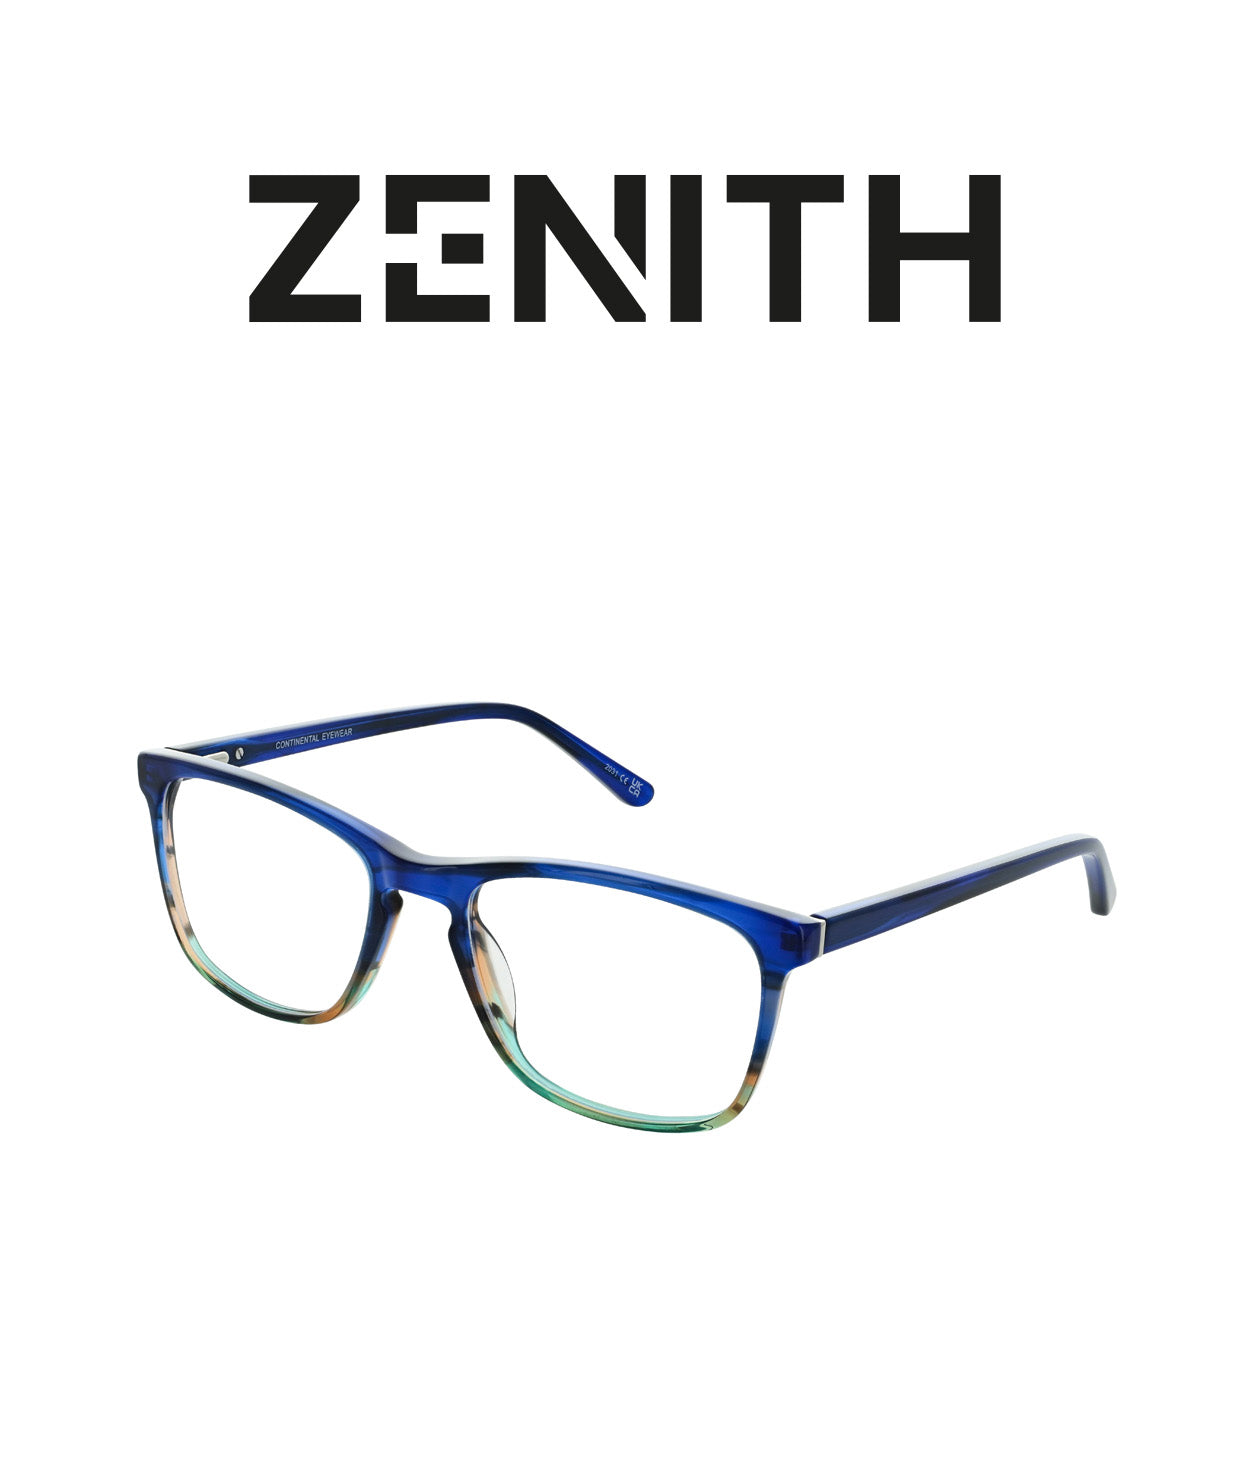 zenith-brand-cover.jpg__PID:afdca4ce-6b87-4b76-b422-aae0dc2c1ef0